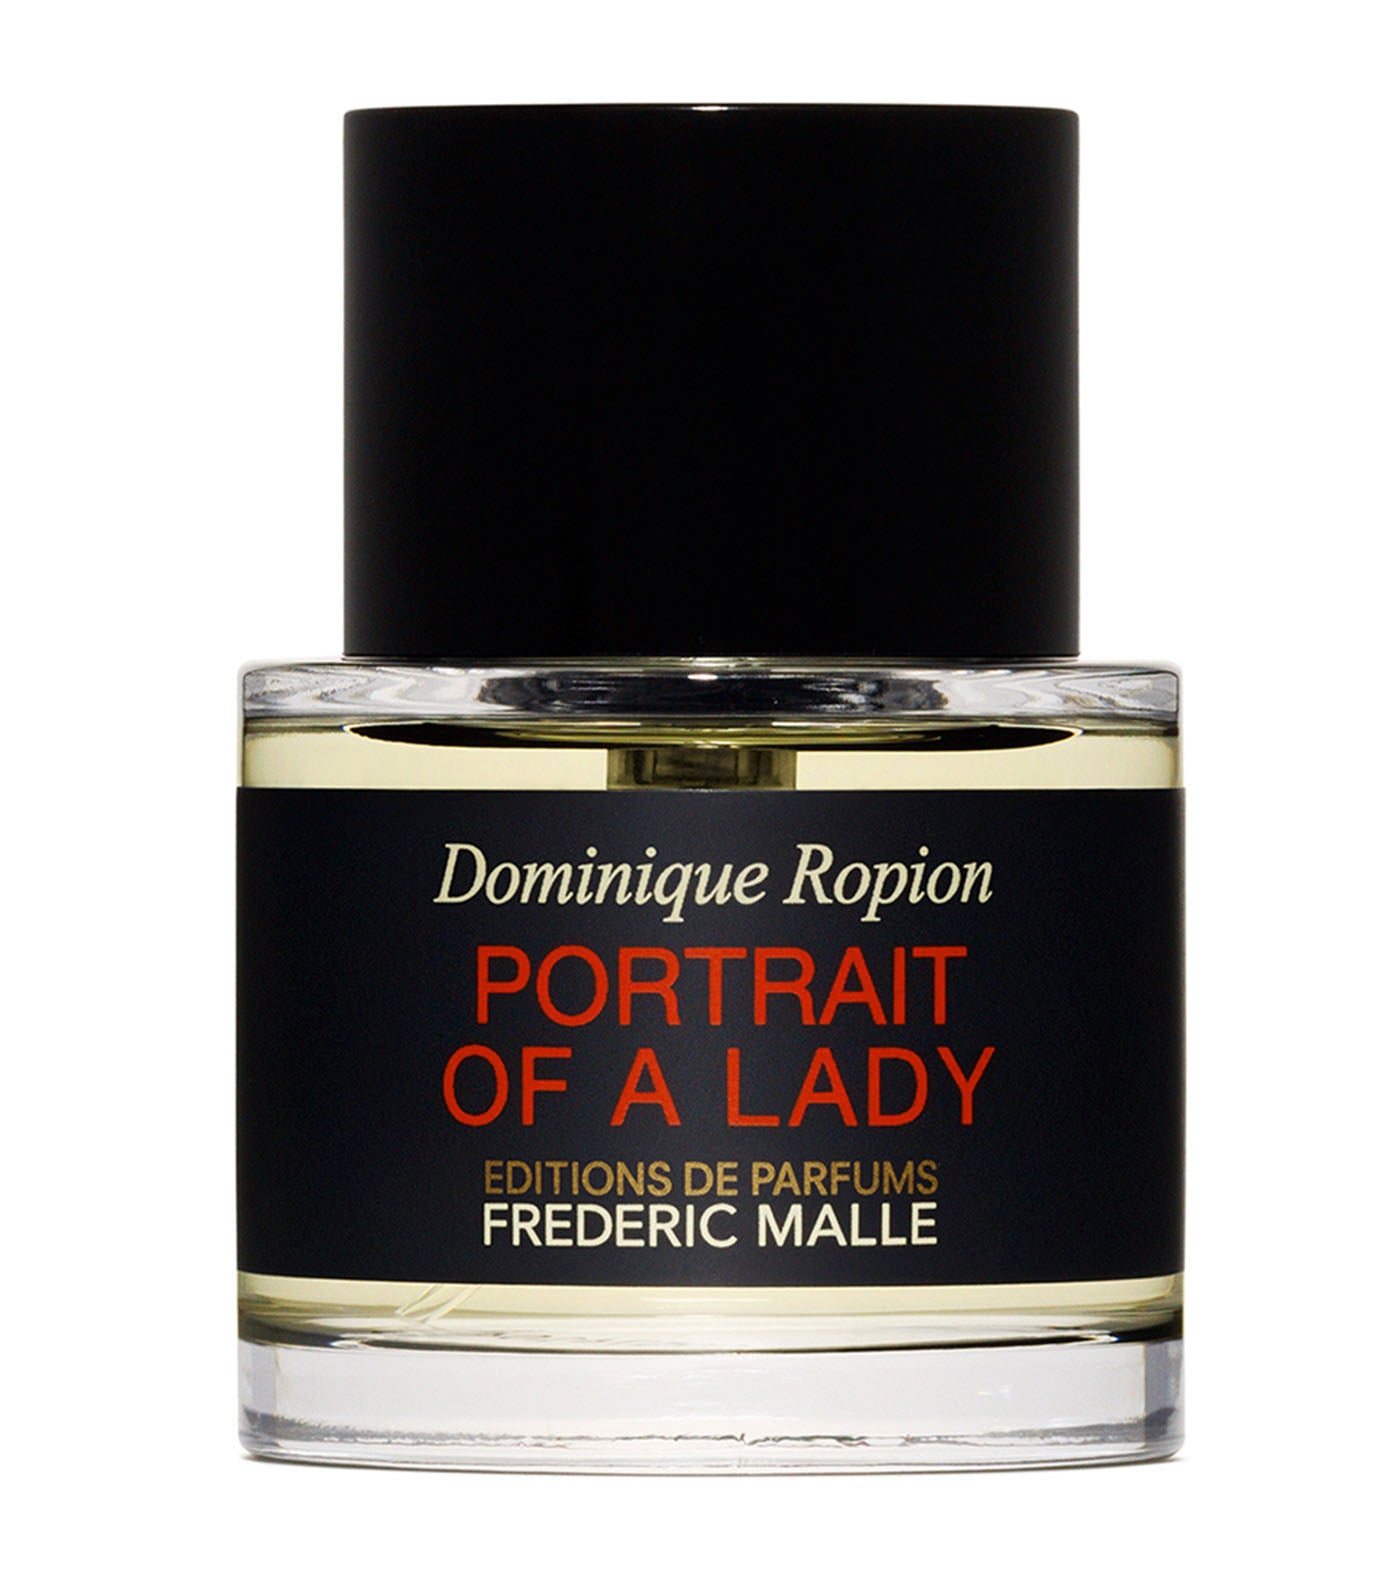 Portrait of a Lady Perfume by Dominique Ropion